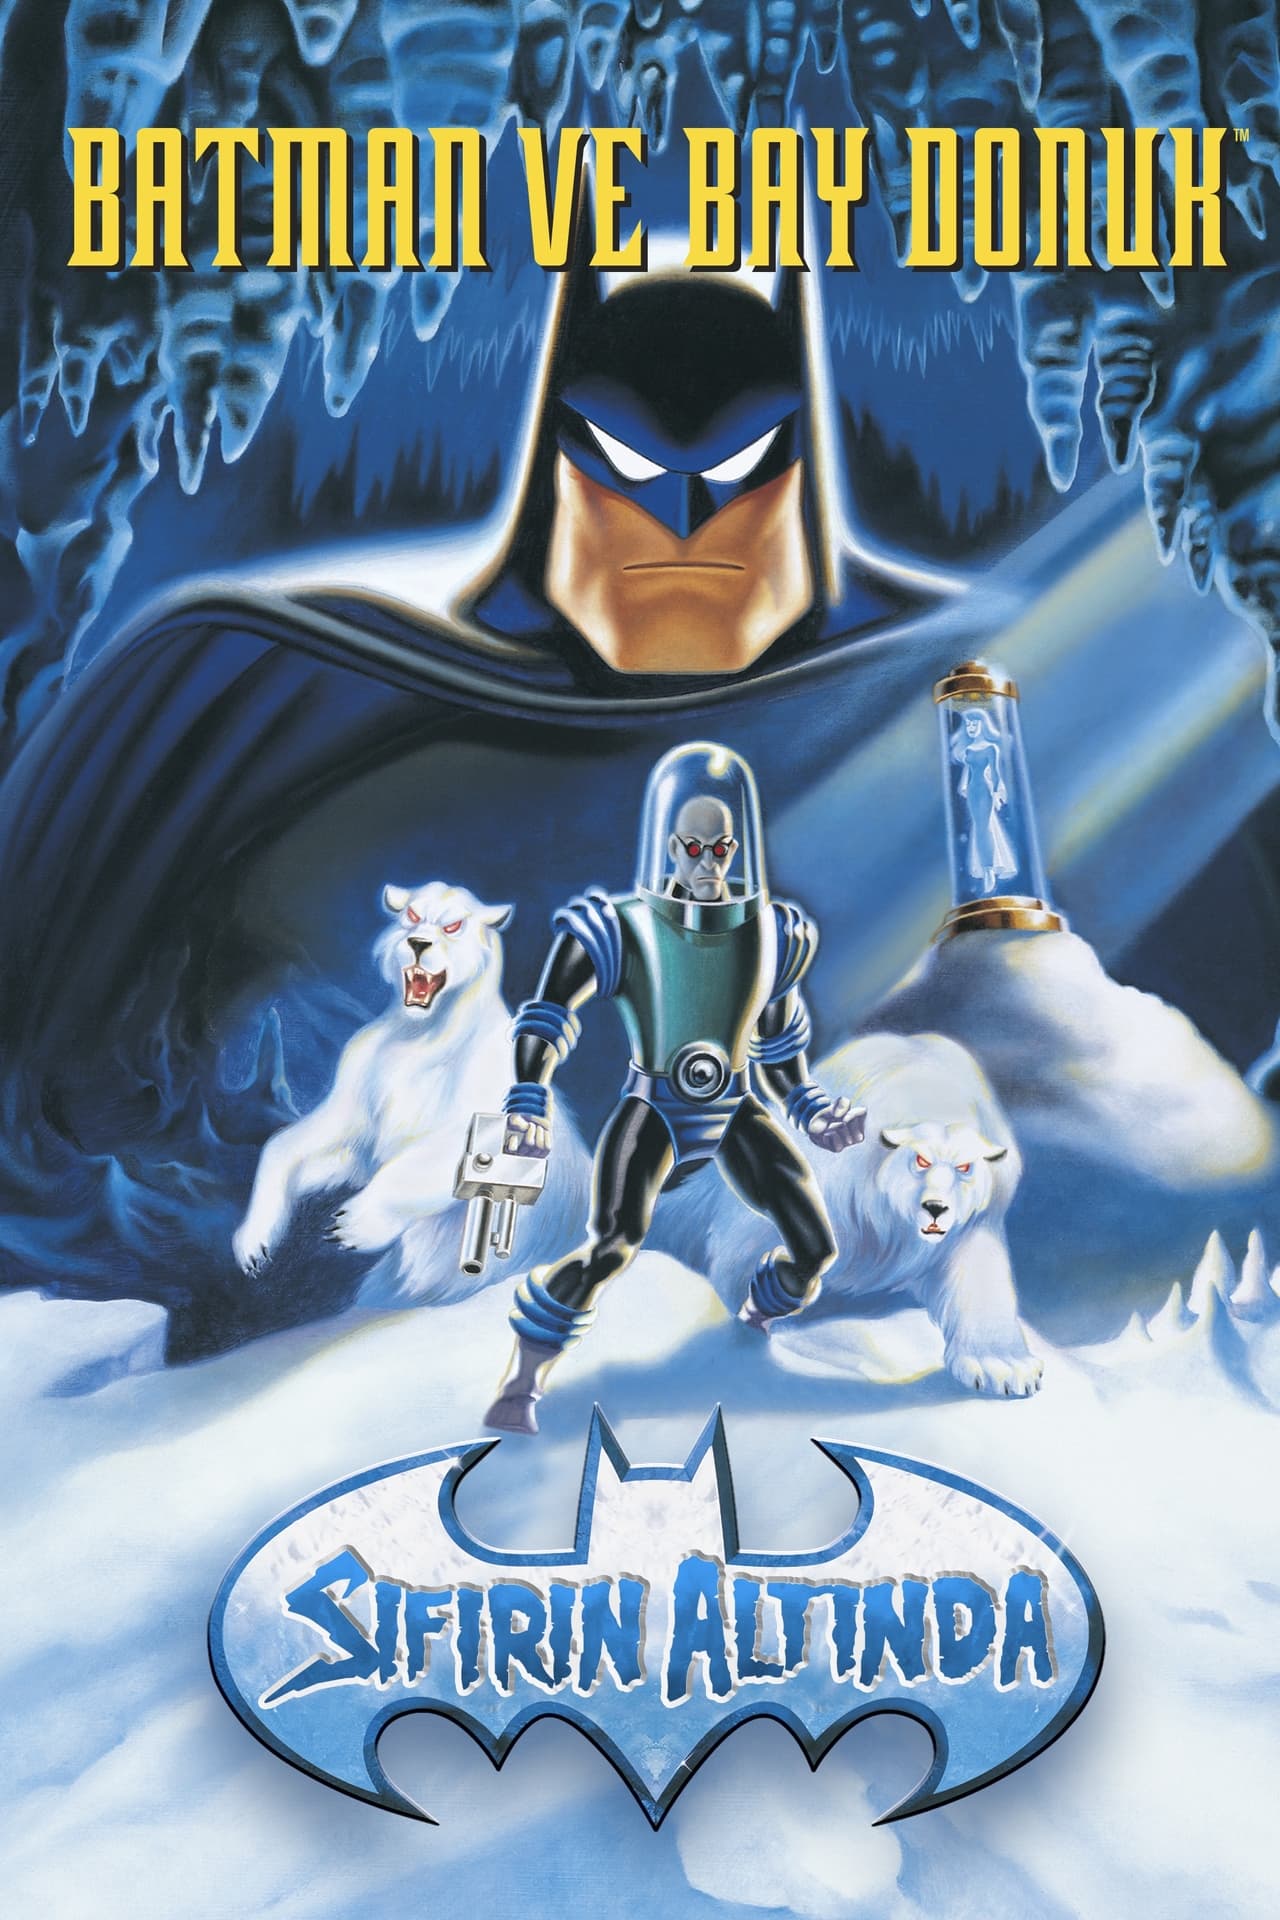 Batman & Mr. Freeze: SubZero (1998) 192Kbps 23.976Fps 48Khz 2.0Ch DigitalTV Turkish Audio TAC